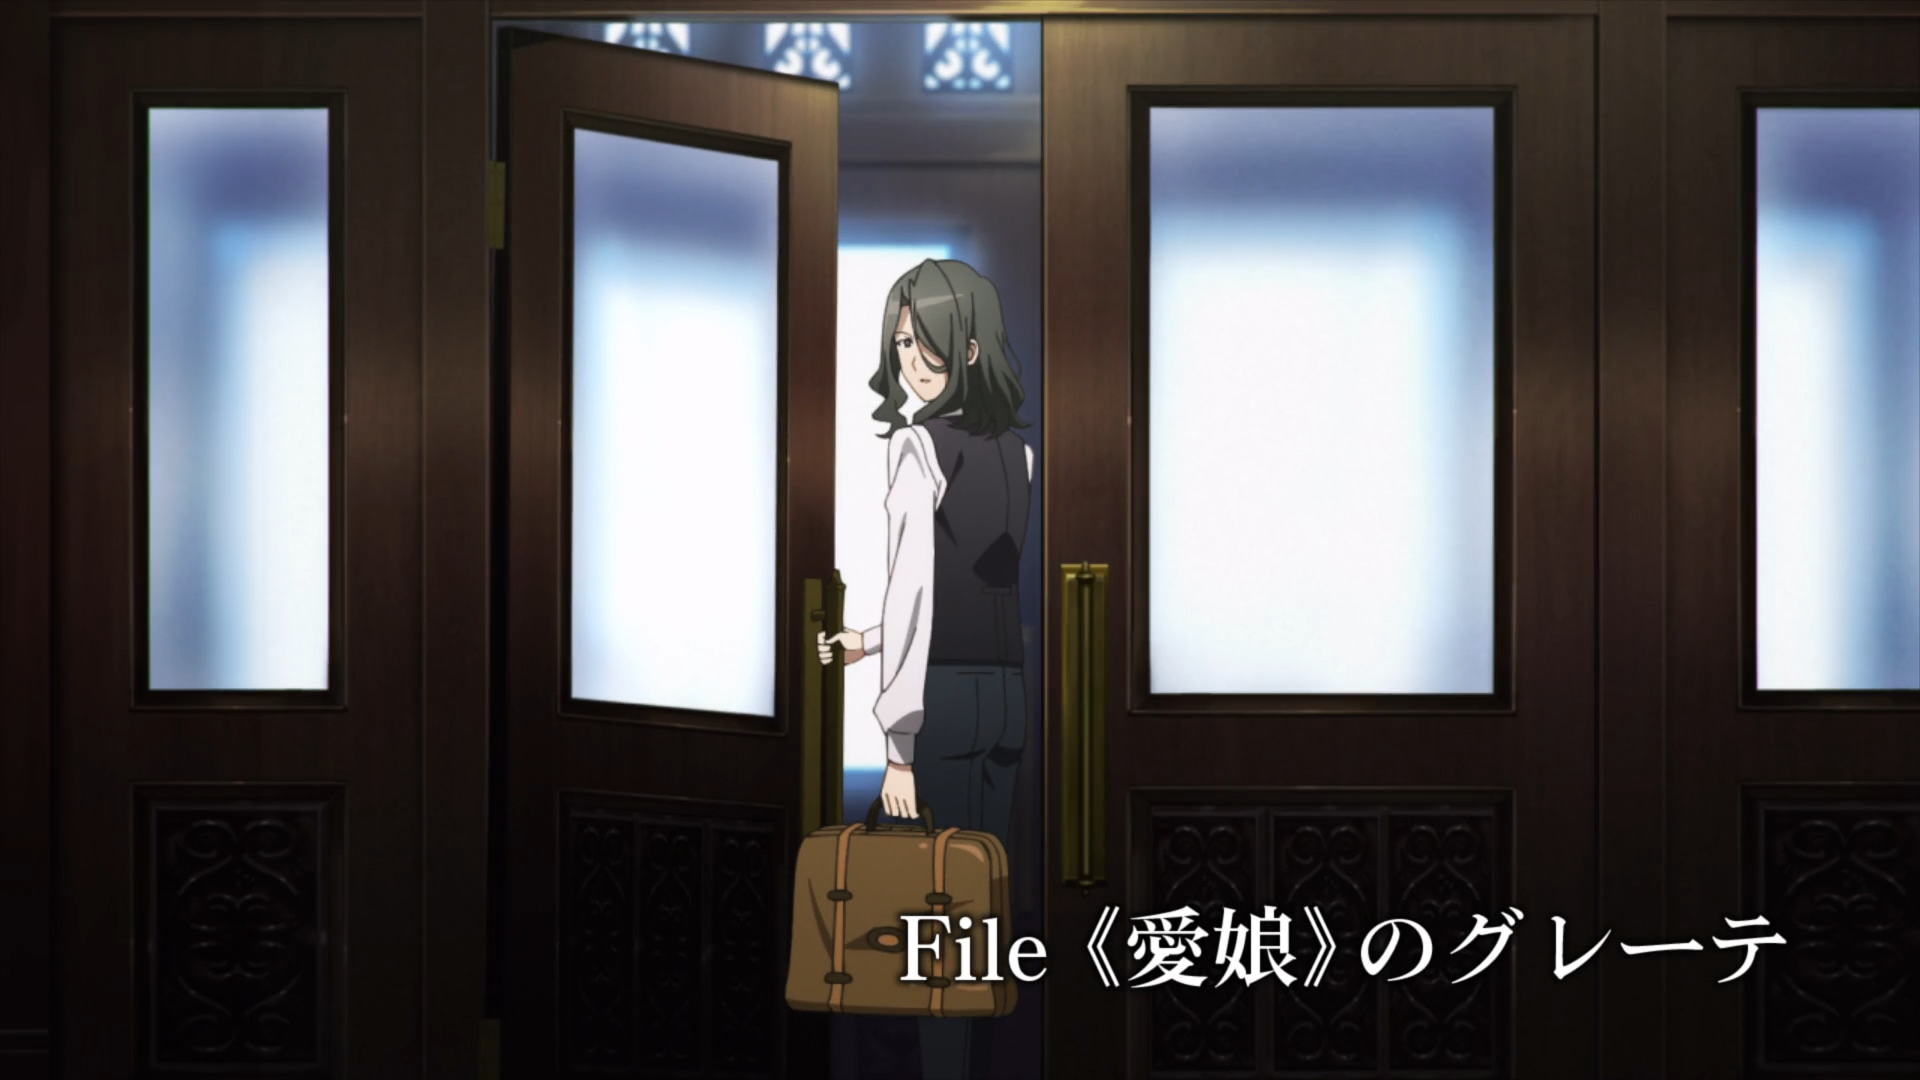 [CD] TV Anime Spy Classroom Special Ending Theme CD File.02